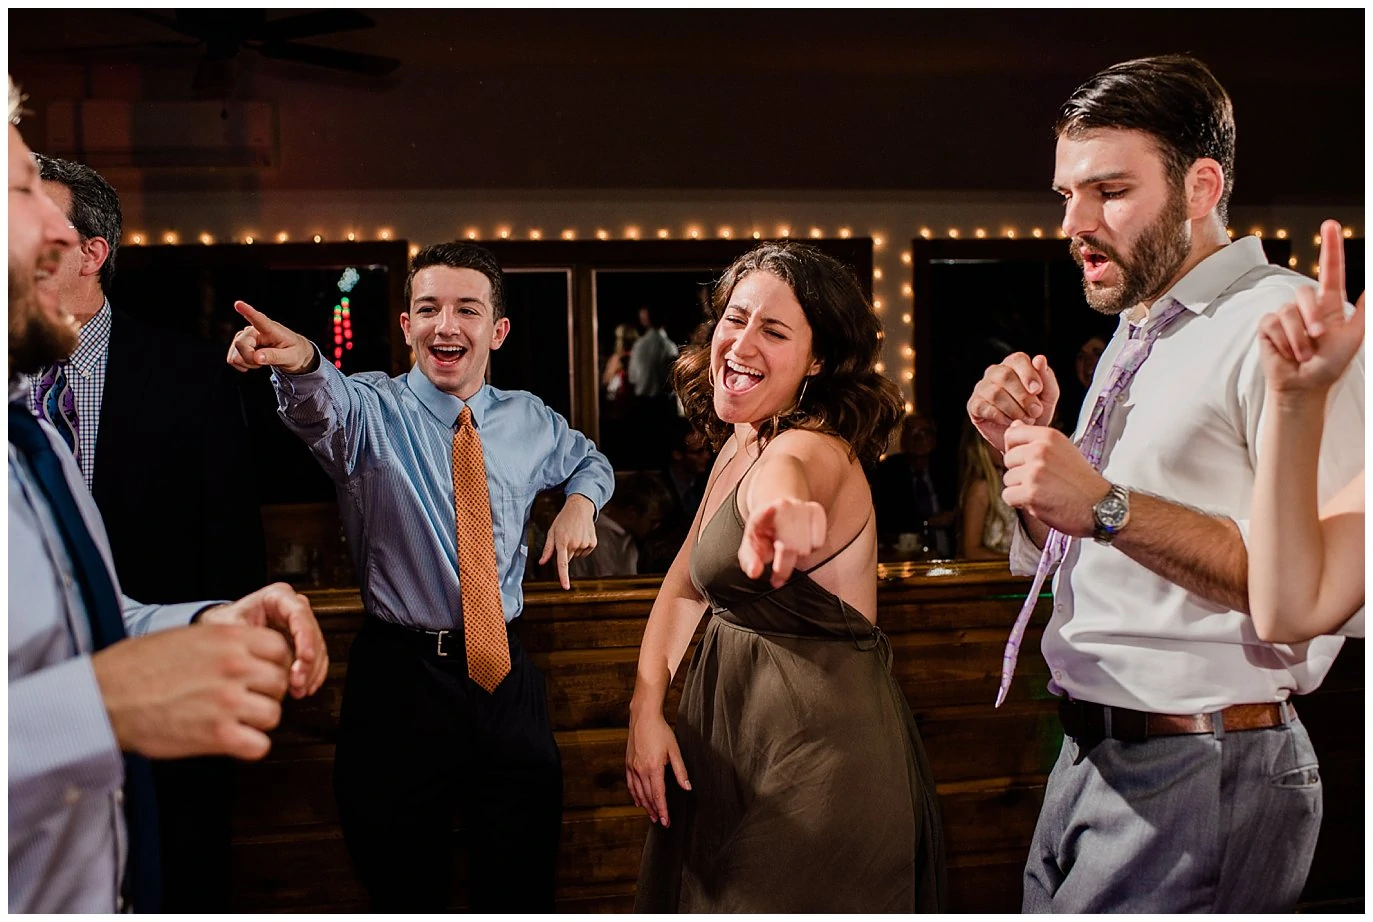 guests dancing at wedding reception photo